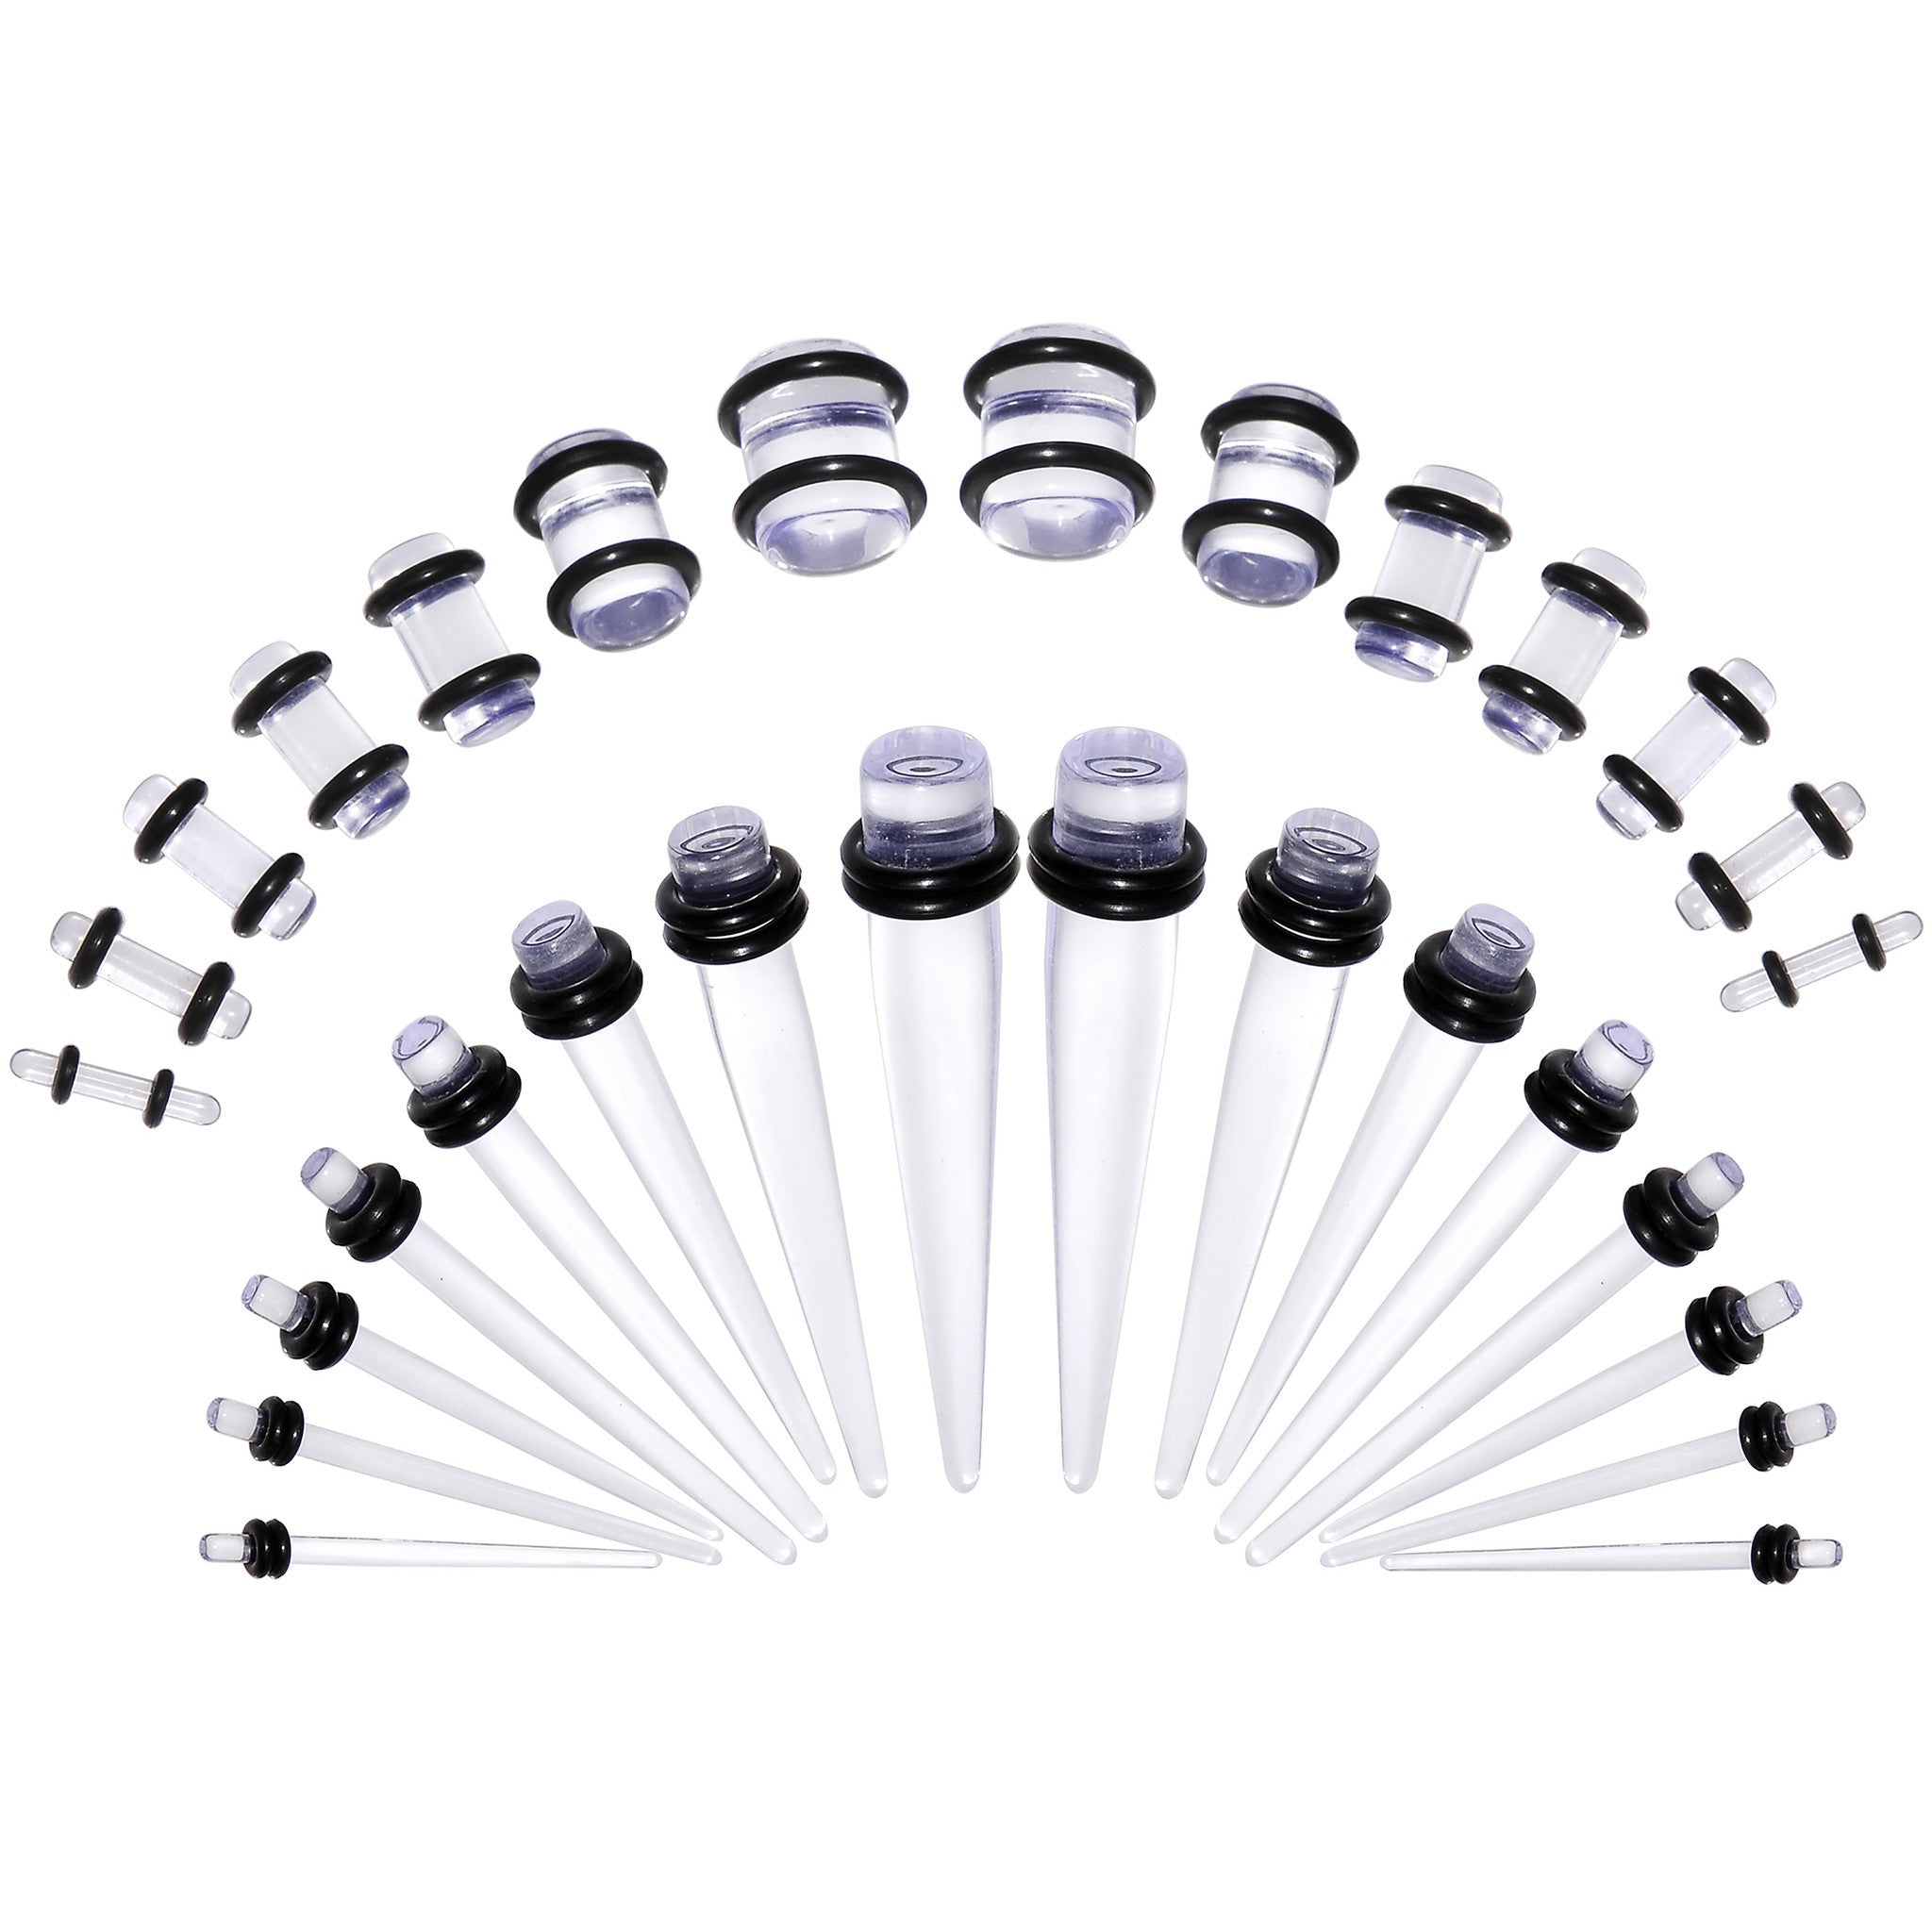 Clear Acrylic Taper Plug Kit - 32 Piece 14 to 00 Gauge Ear Stretchers